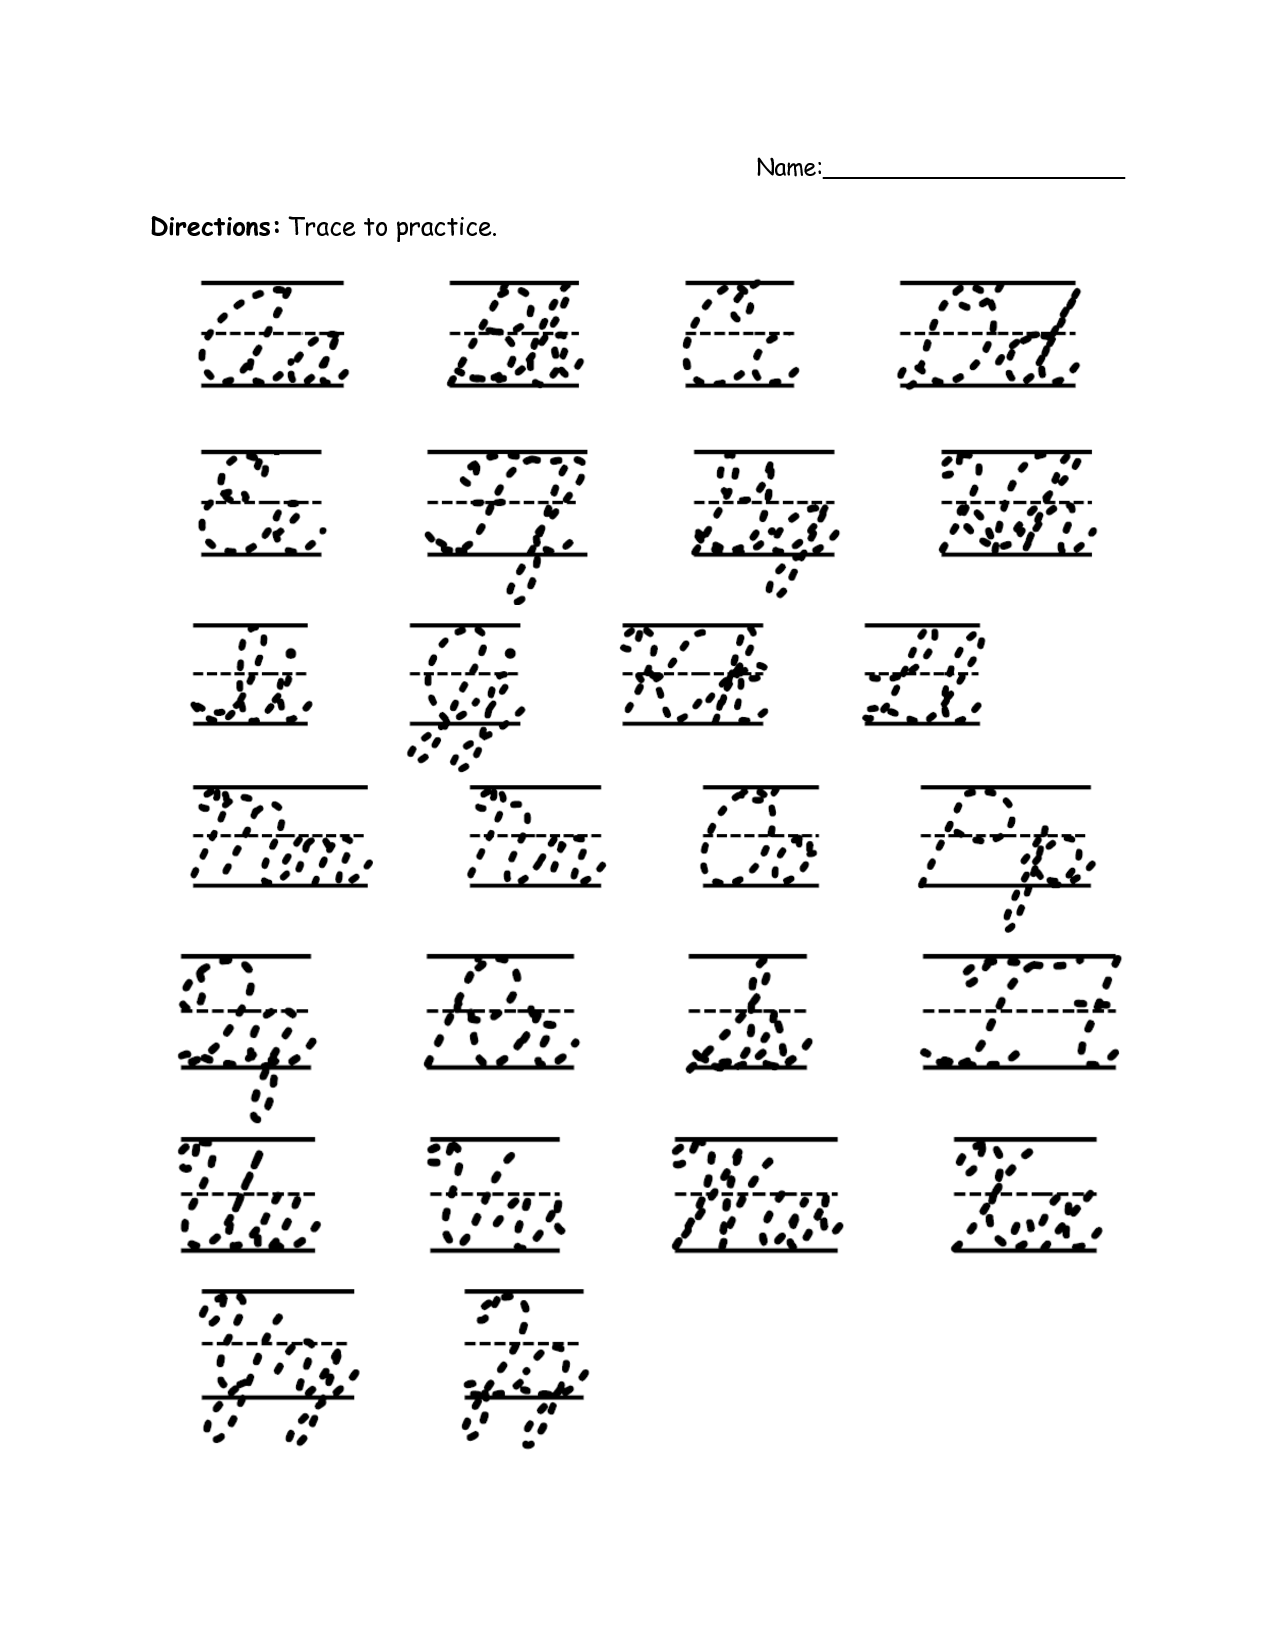 11-best-images-of-cursive-handwriting-worksheets-for-3rd-grade-plural-nouns-worksheets-3rd